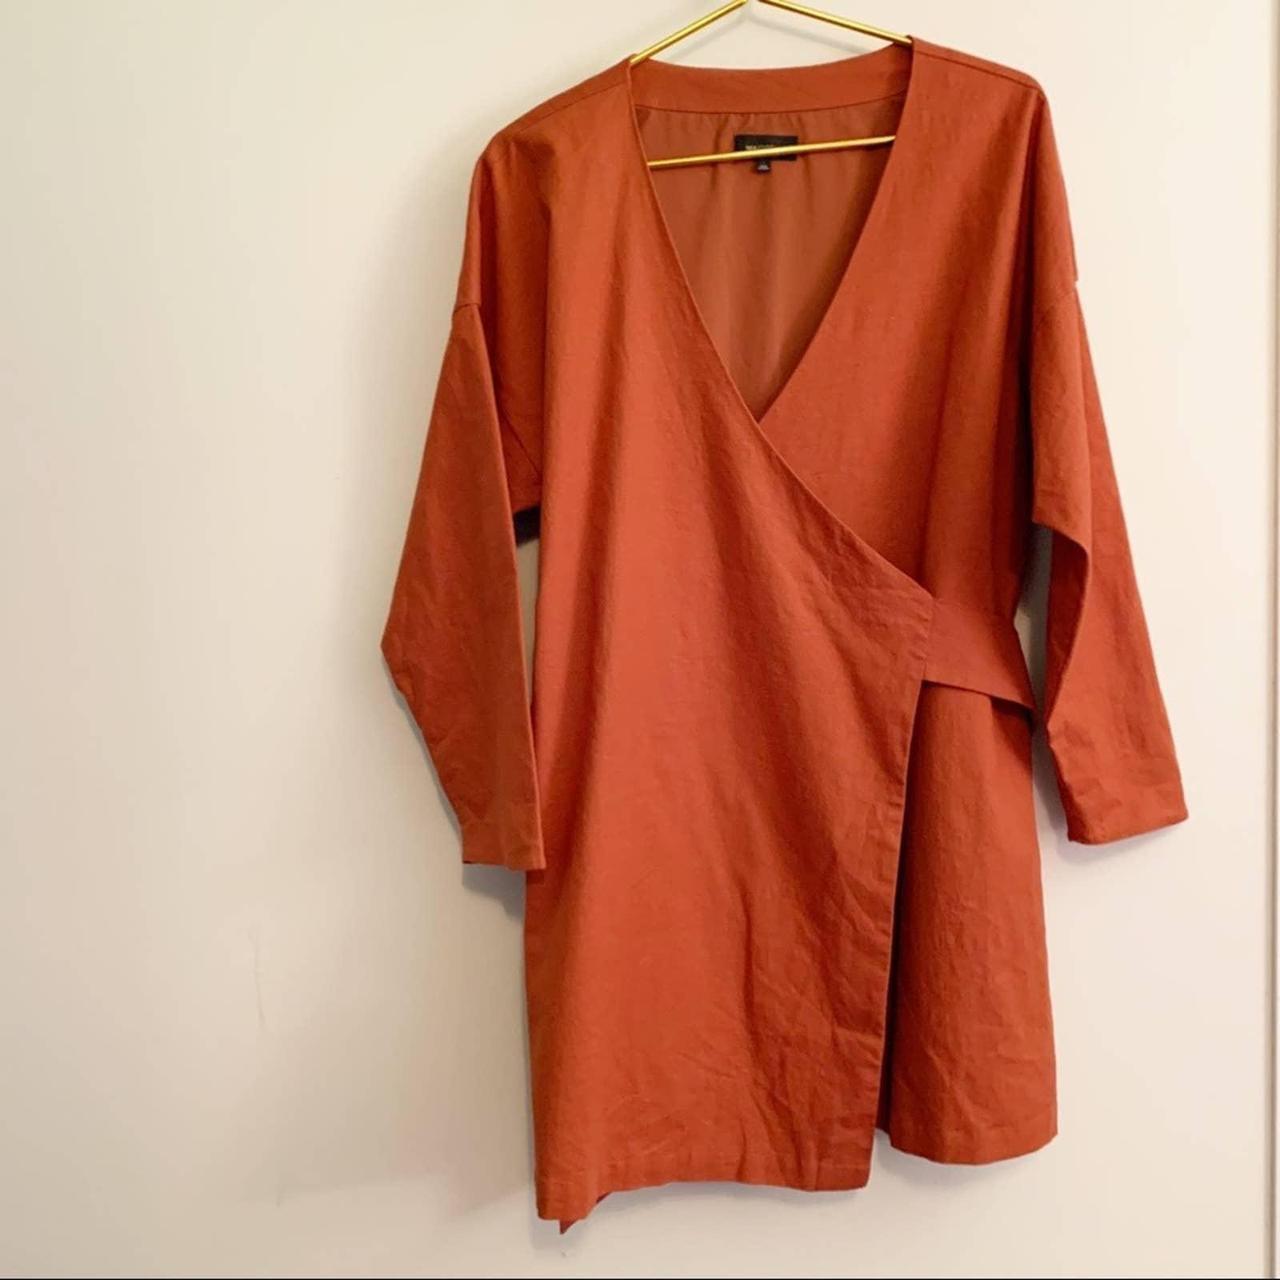 Nordstrom Women's Orange Dress | Depop